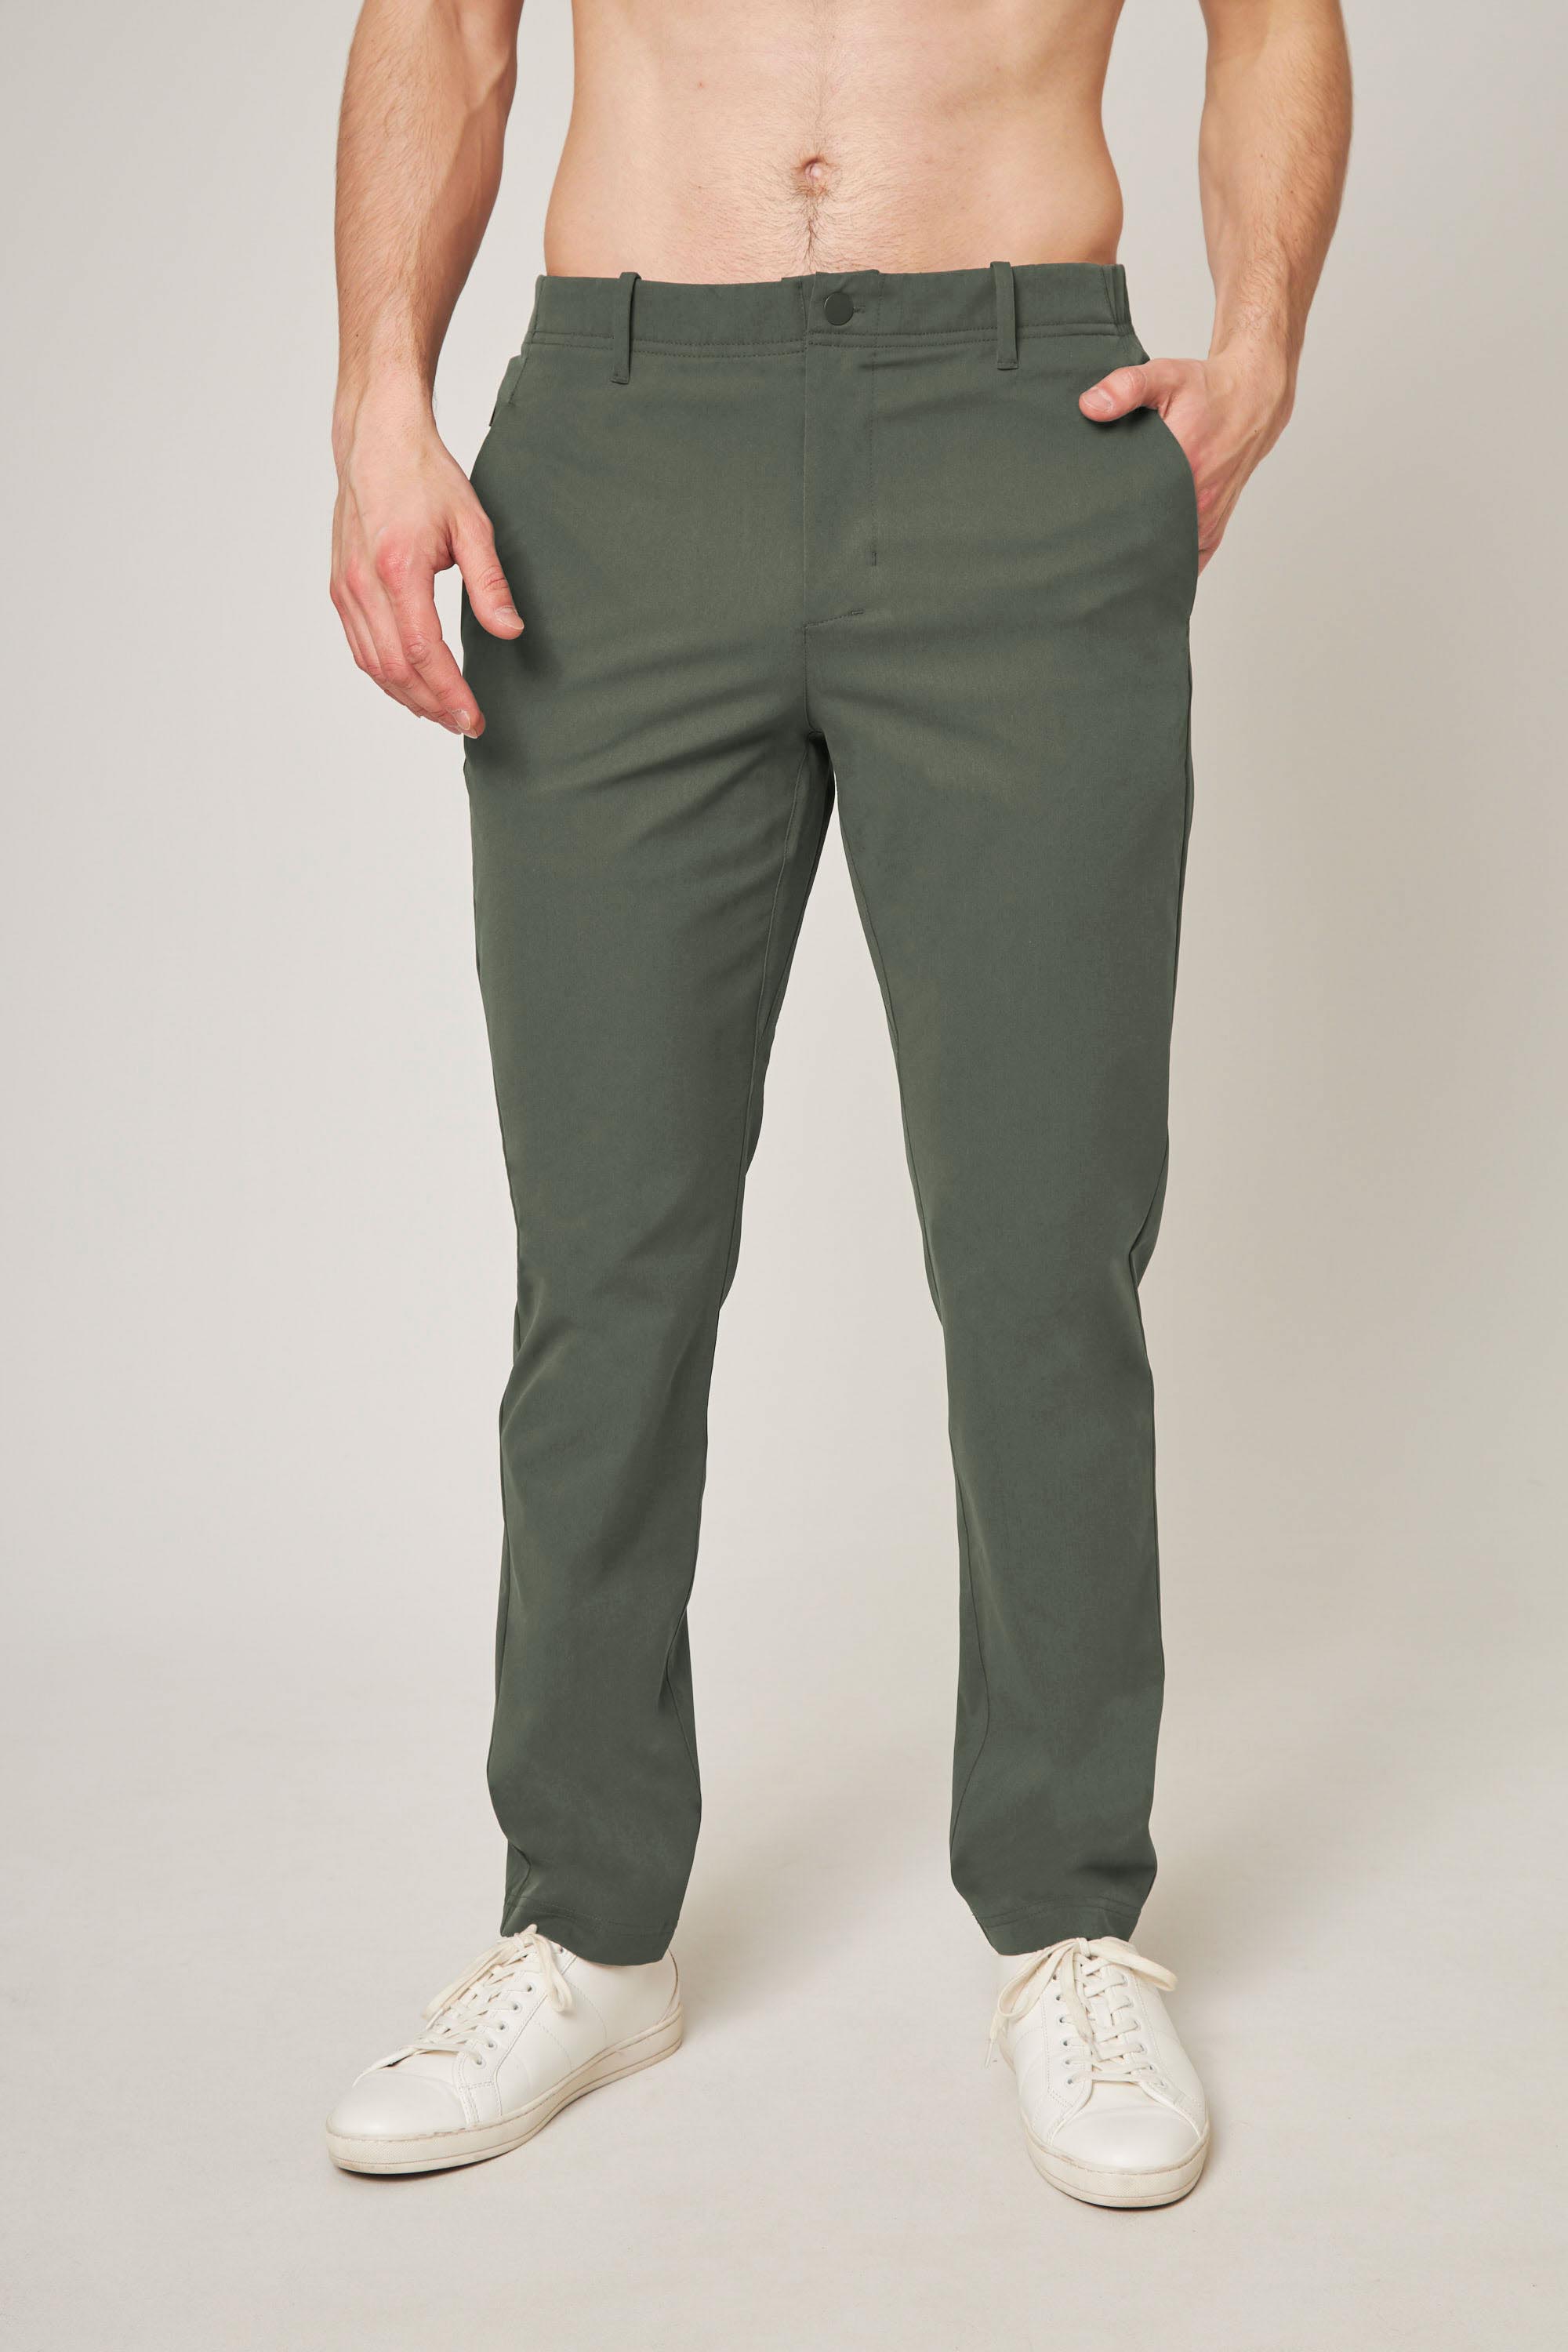 Trendy MONDETTA Olive Green Cargo Pants